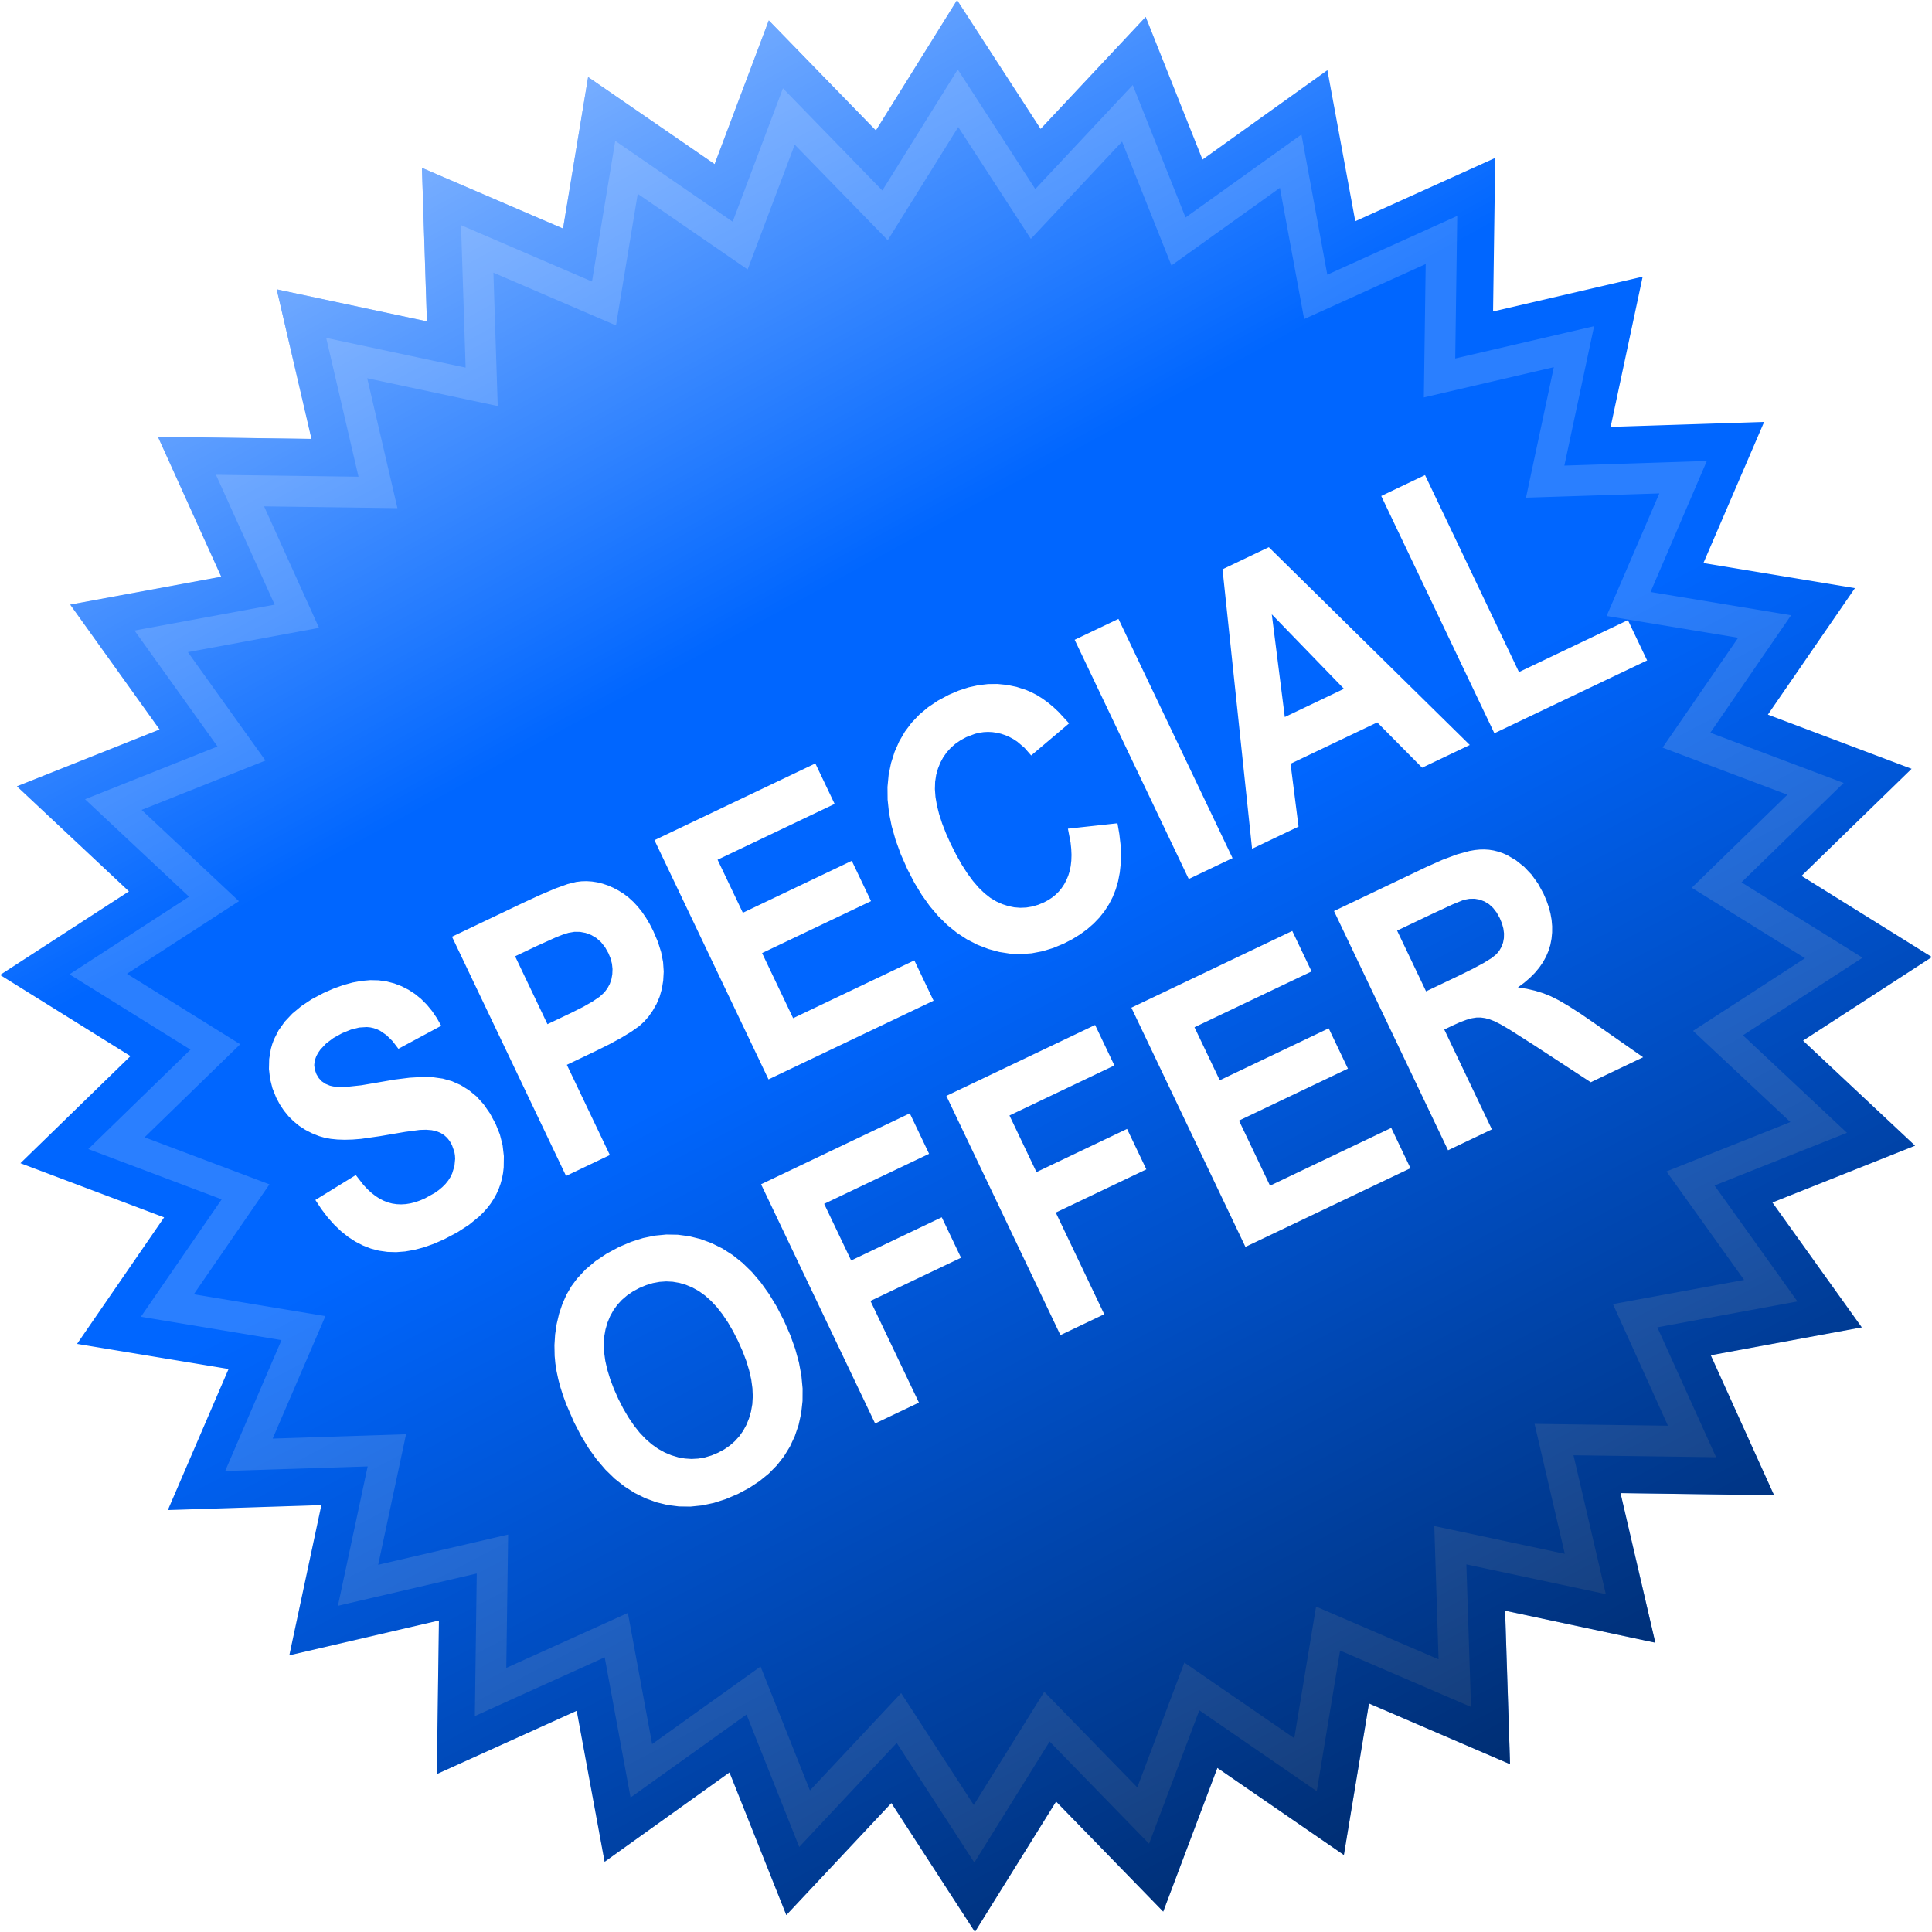 Голубой special offer